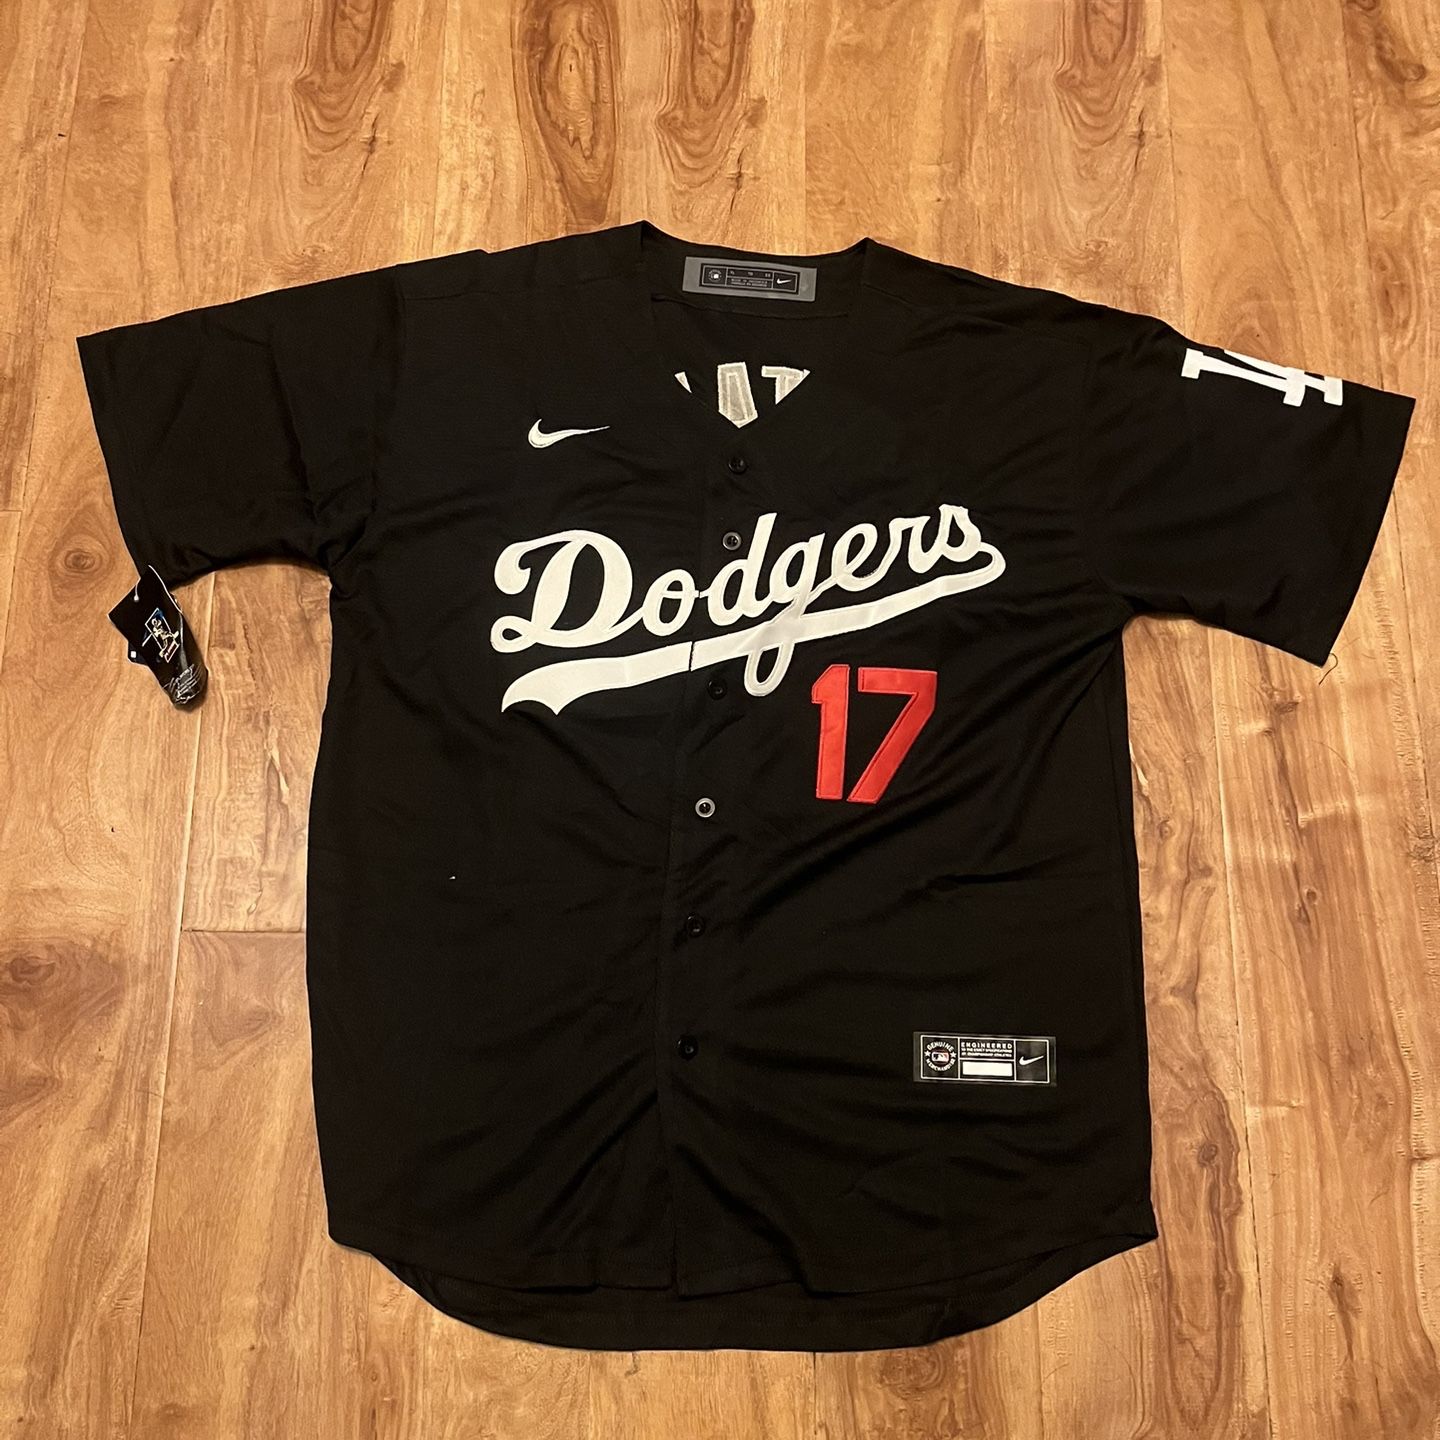 Dodgers Ohtani #17 Jersey Black